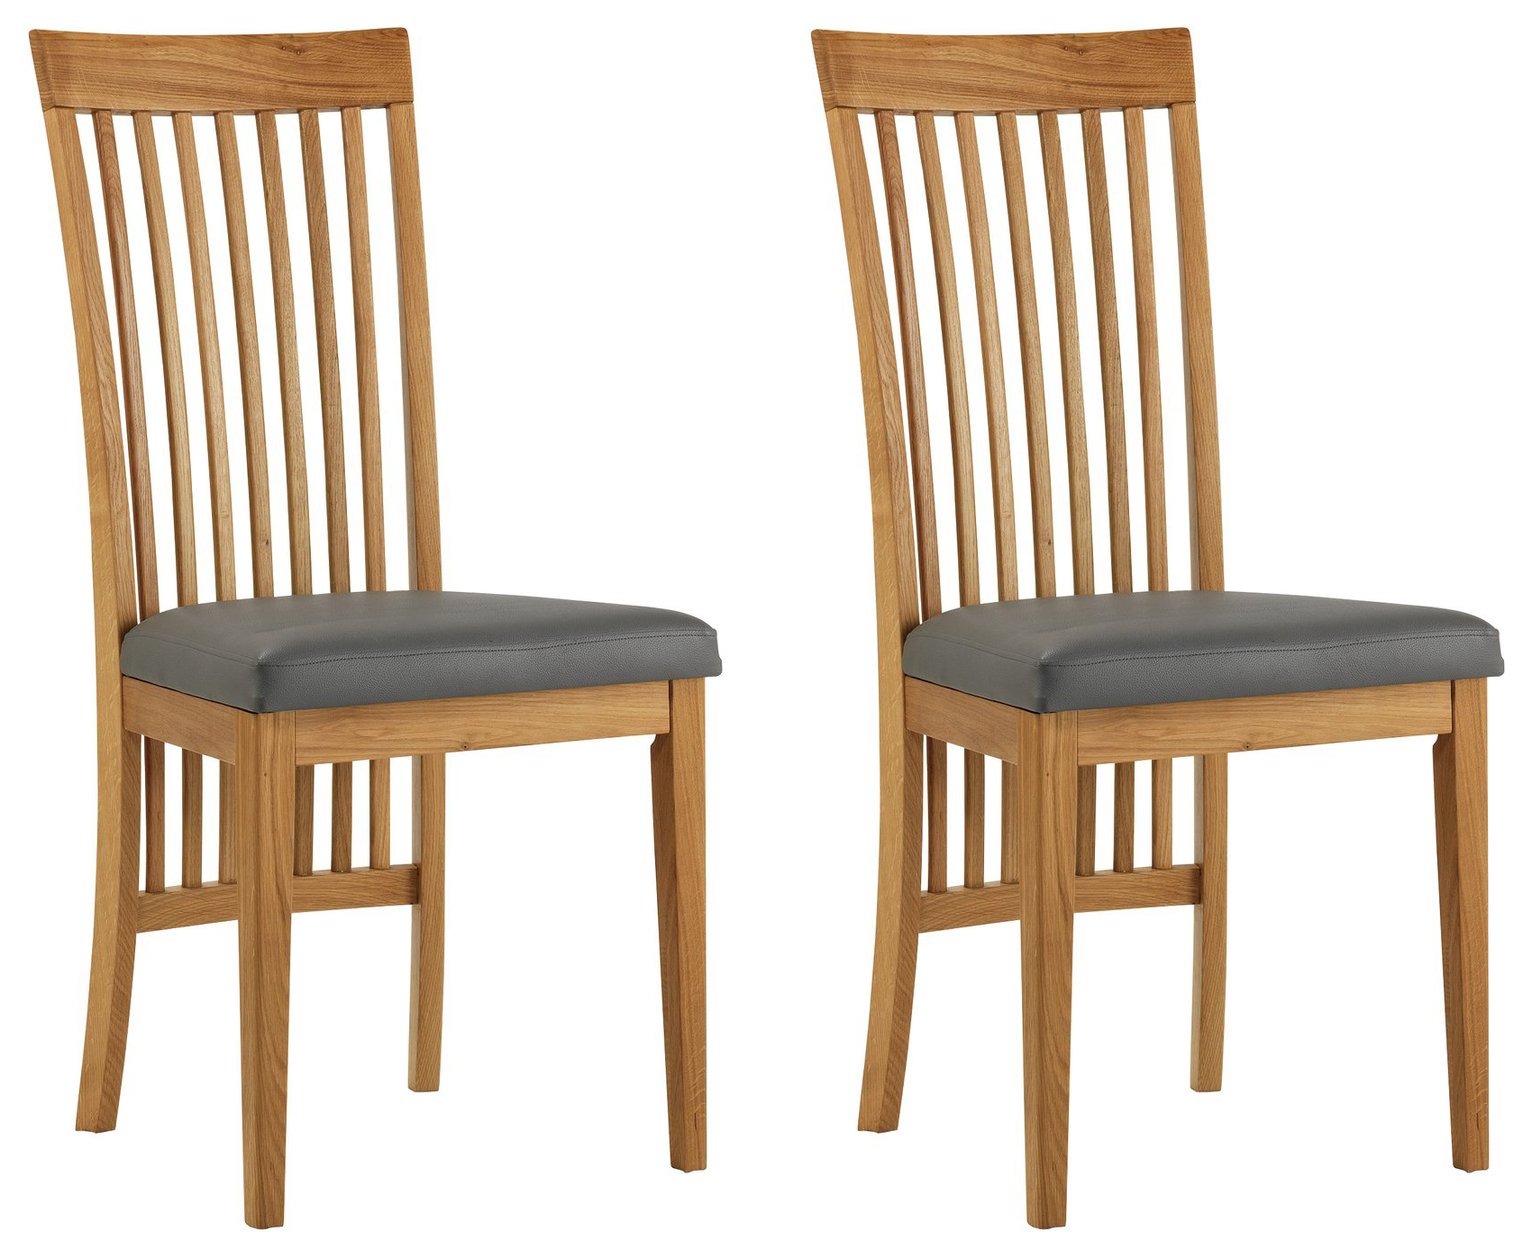 Argos Home Pembridge Pair of Slatted Chairs Reviews